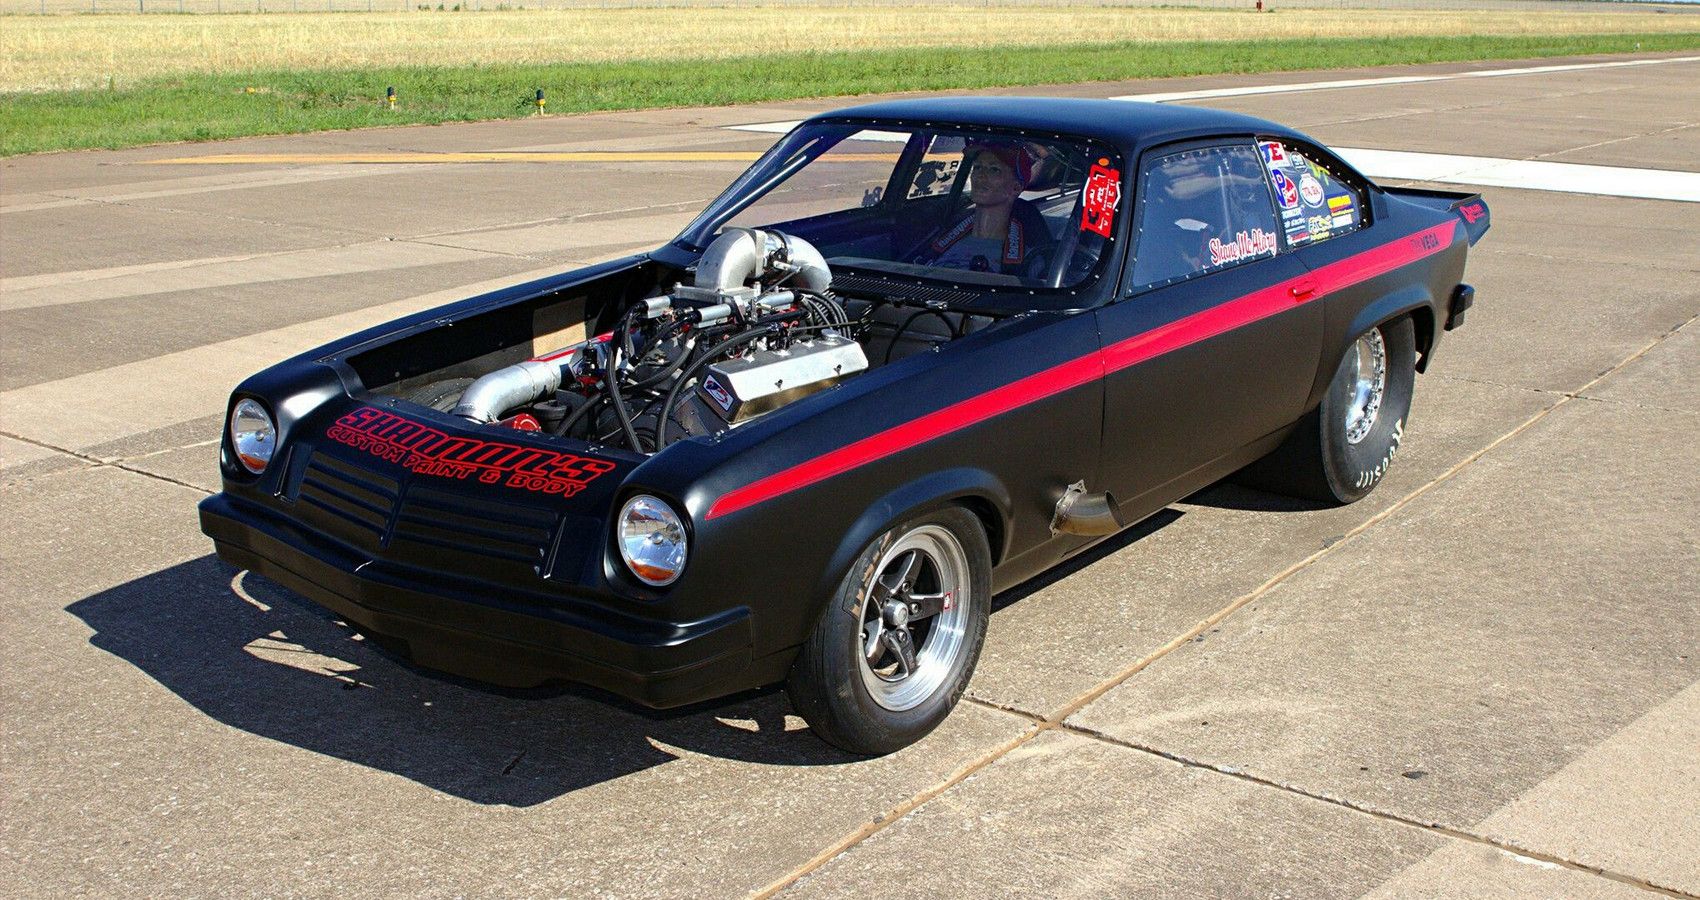 The Blackbird - 1977 Chevrolet Nova